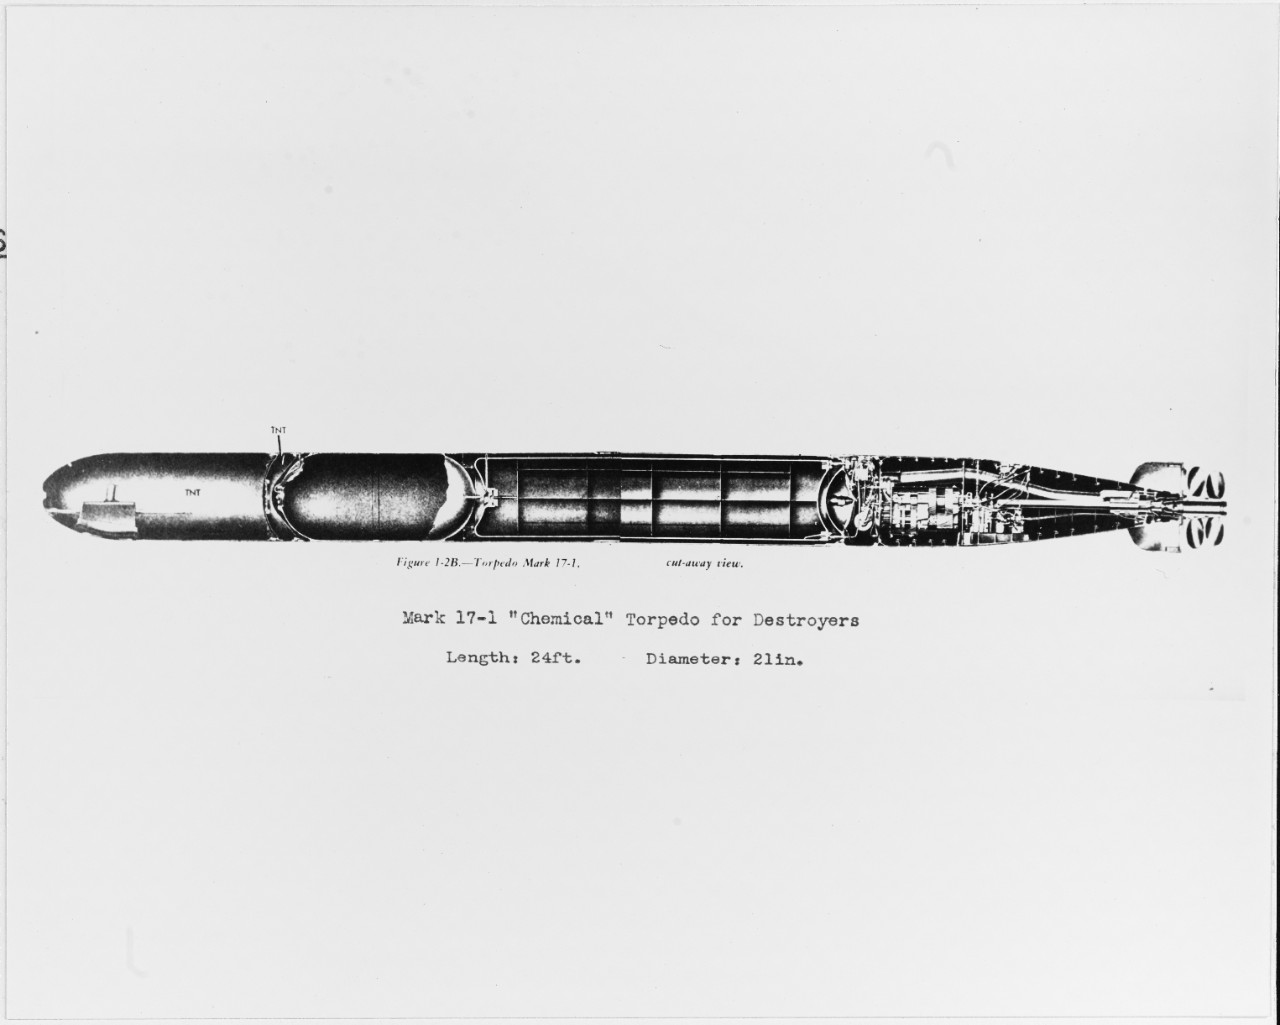 Mk. XVII-I "chemical" torpedo, for destroyers.